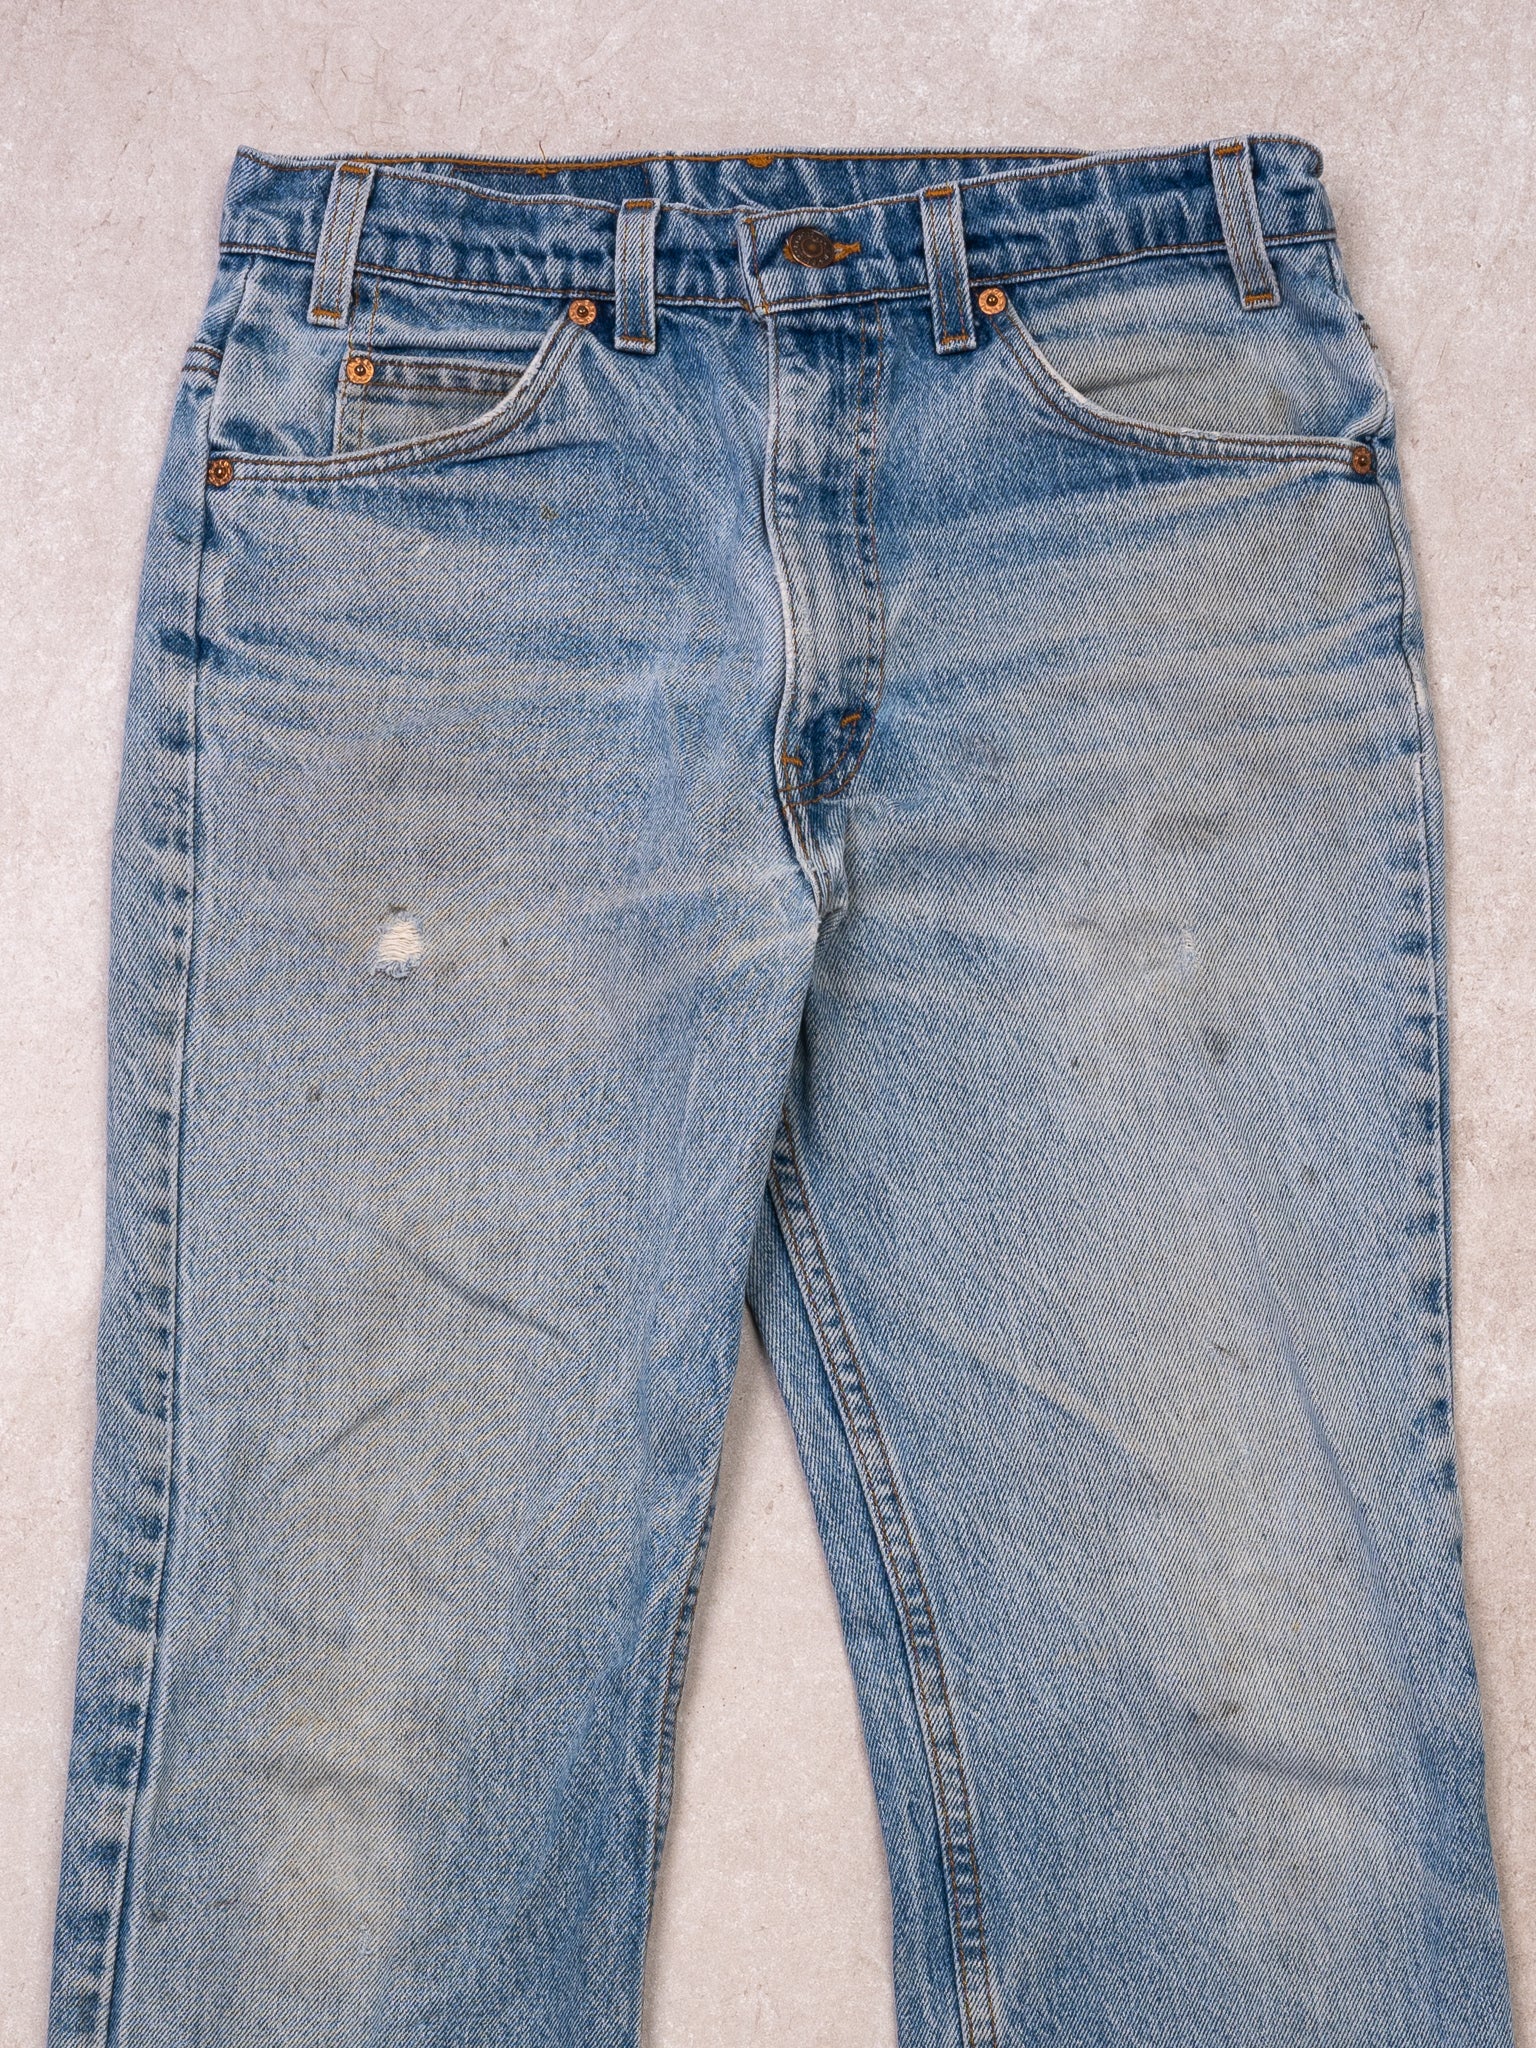 Vintage Rugged Light Blue 517 Levi Jeans (30 x 30)